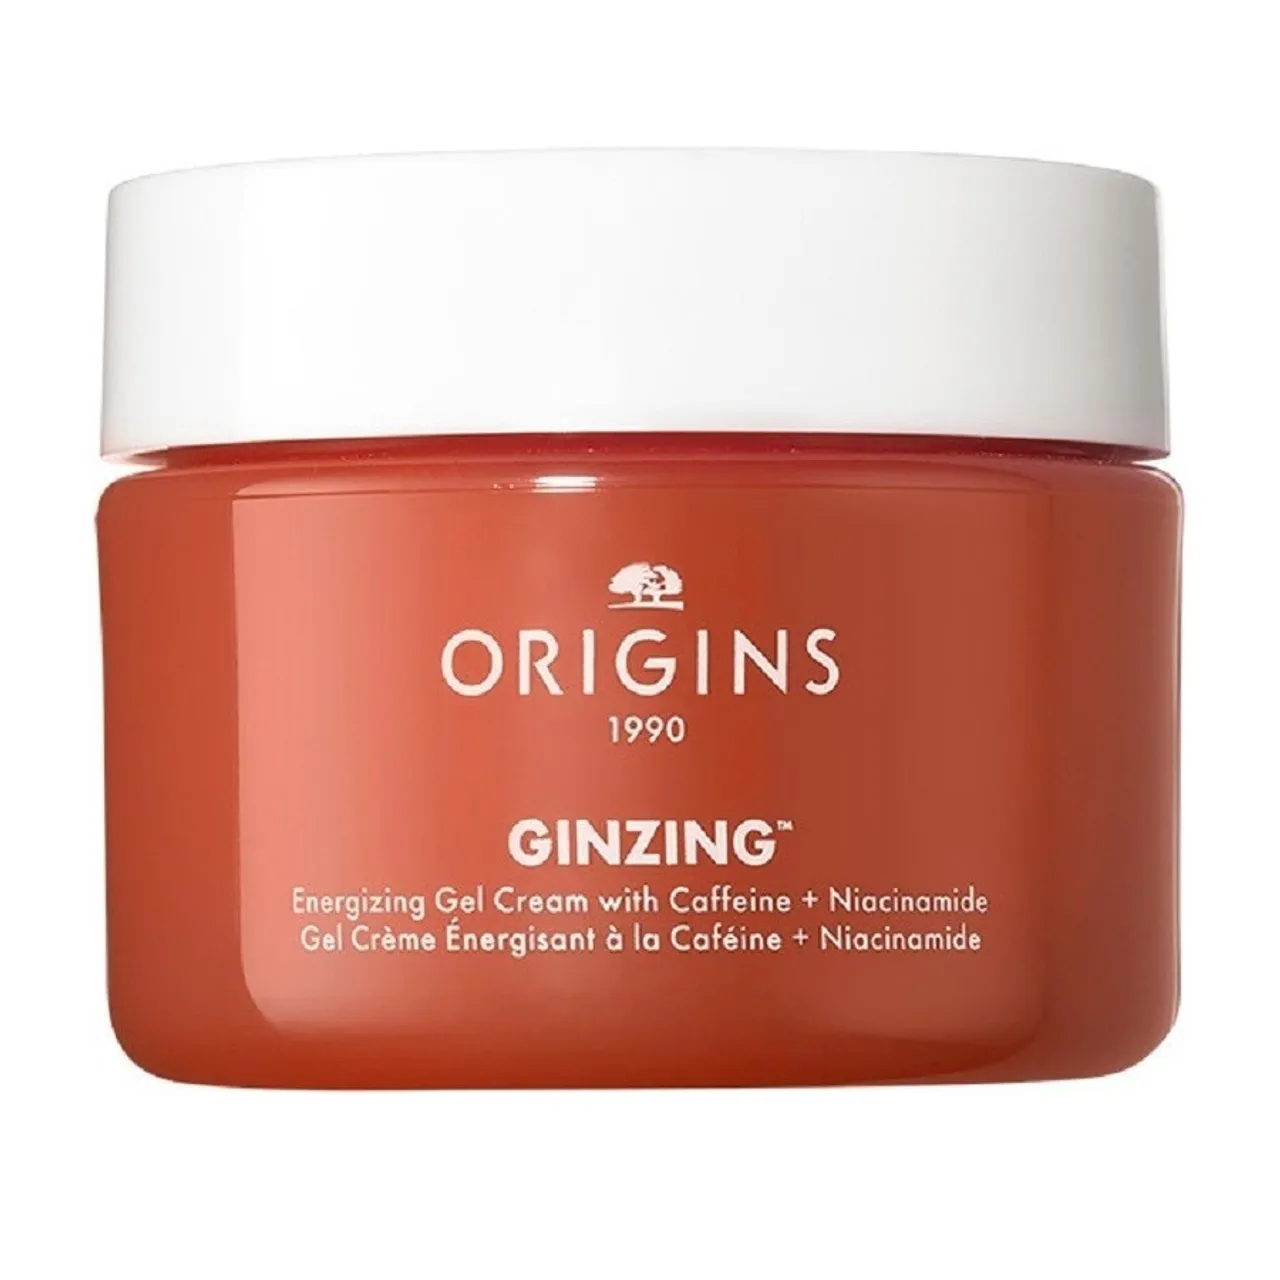 GinZing™ Energizing Gel Cream with Caffeine + Niacinamide